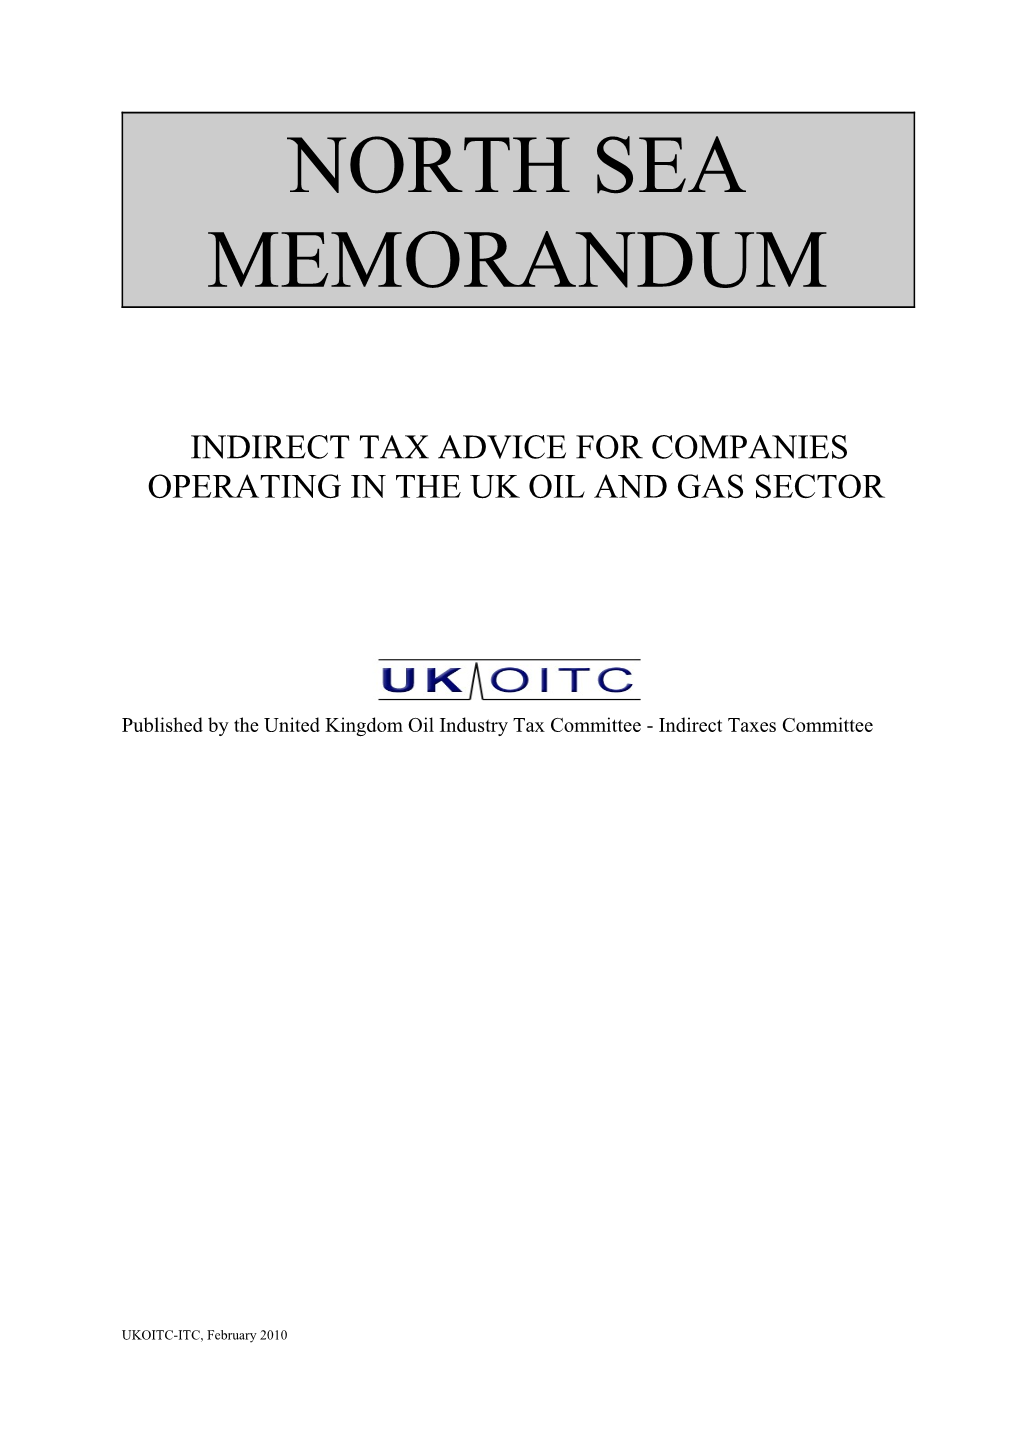 Indirect Tax Advice for Companies